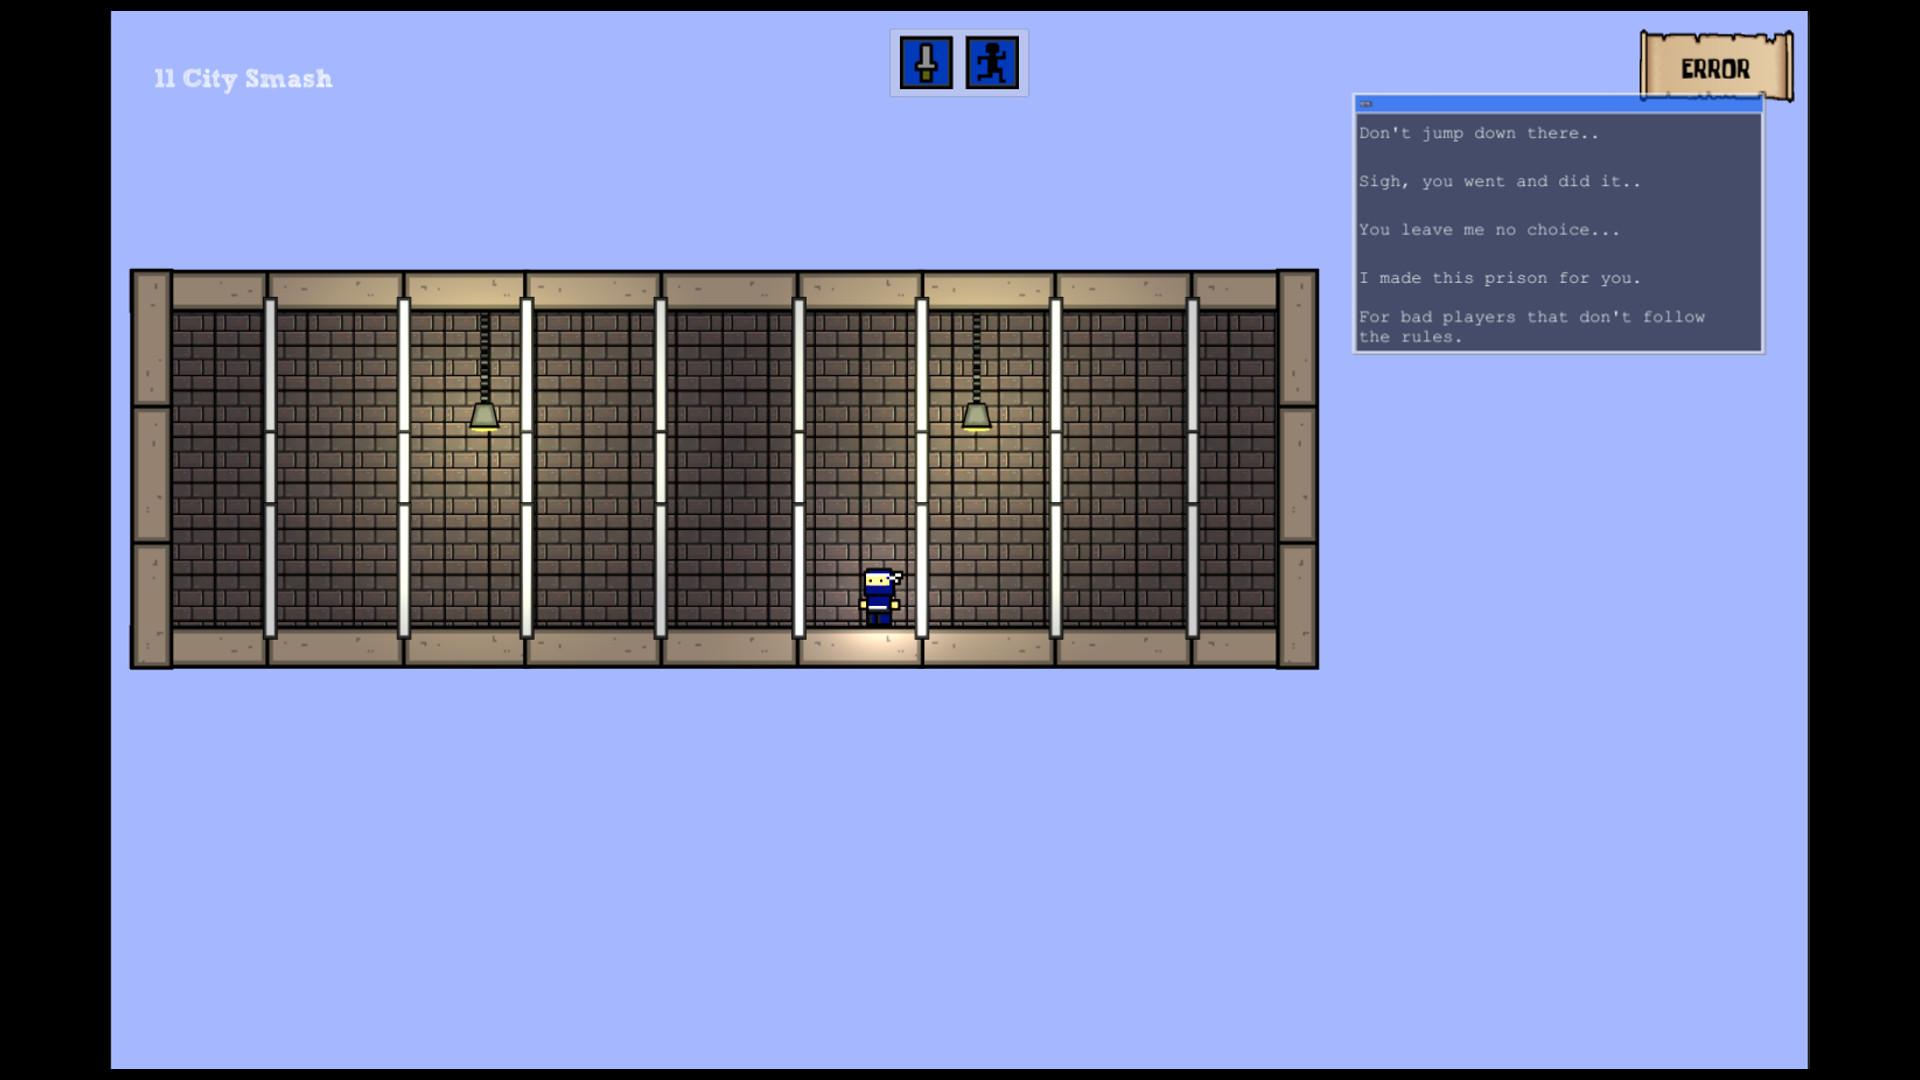 Screenshot №11 from game Save the Ninja Clan